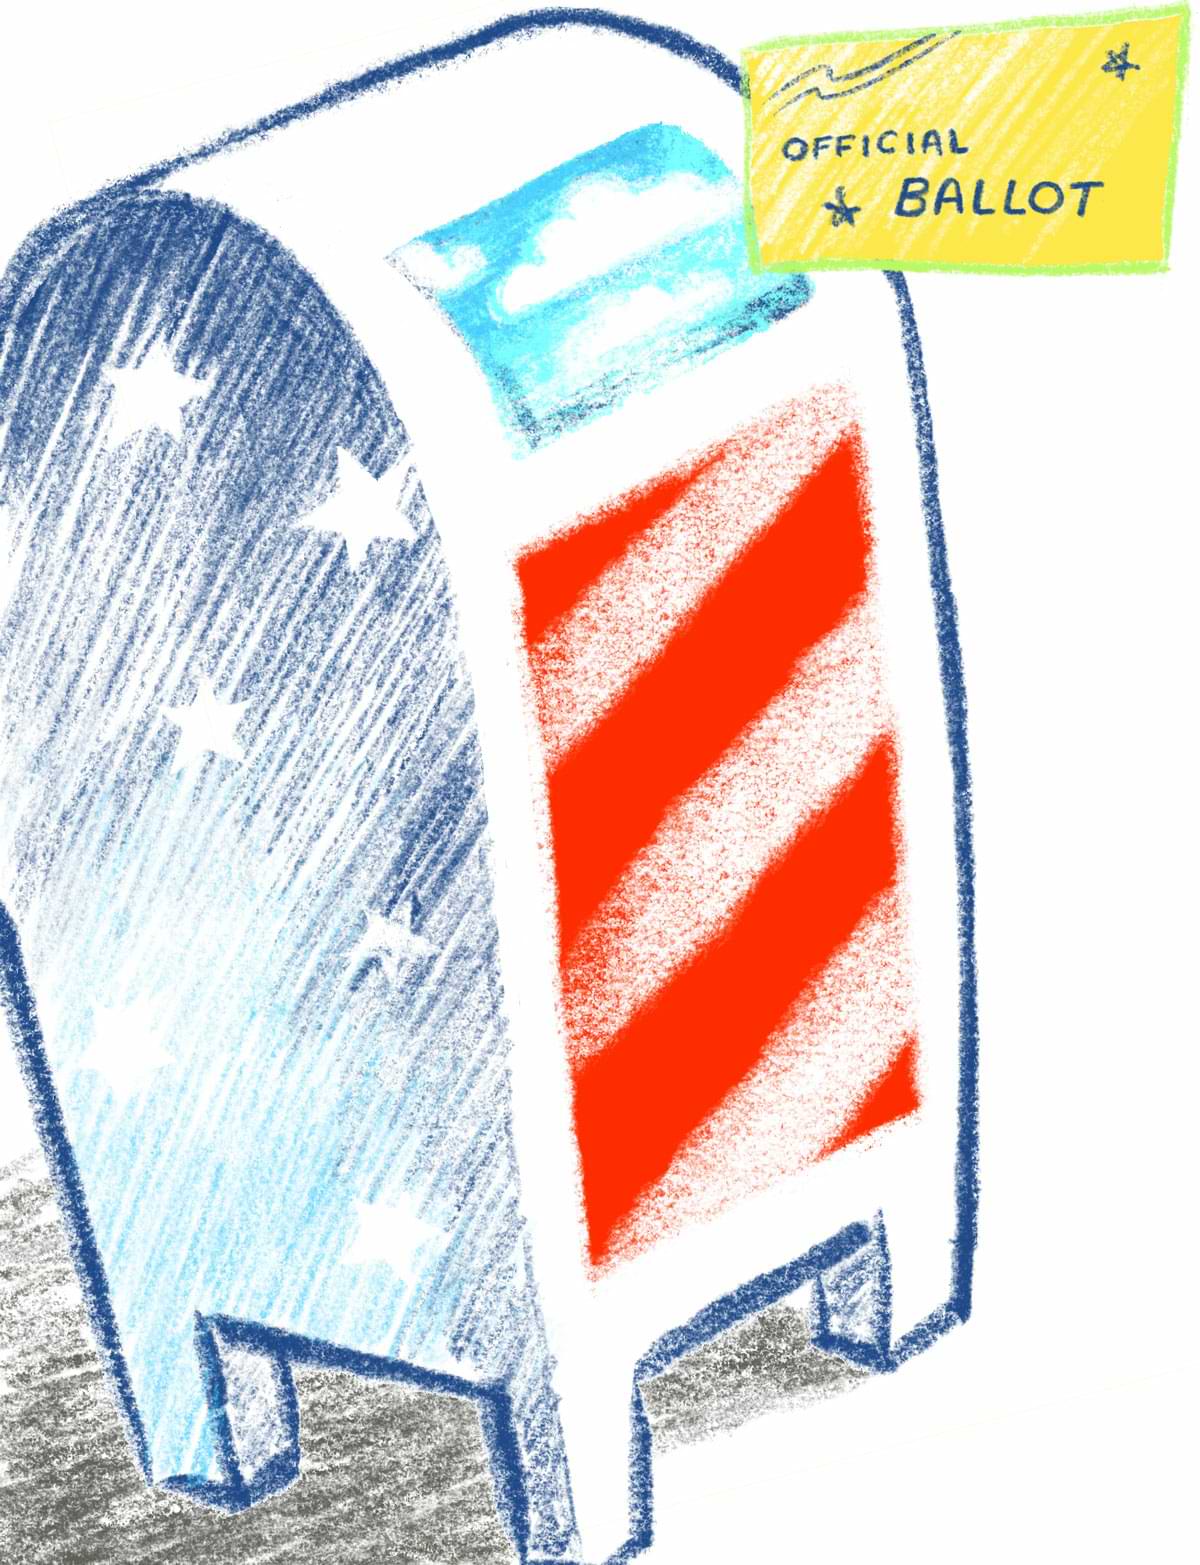 Illustration of voter ballot drop box